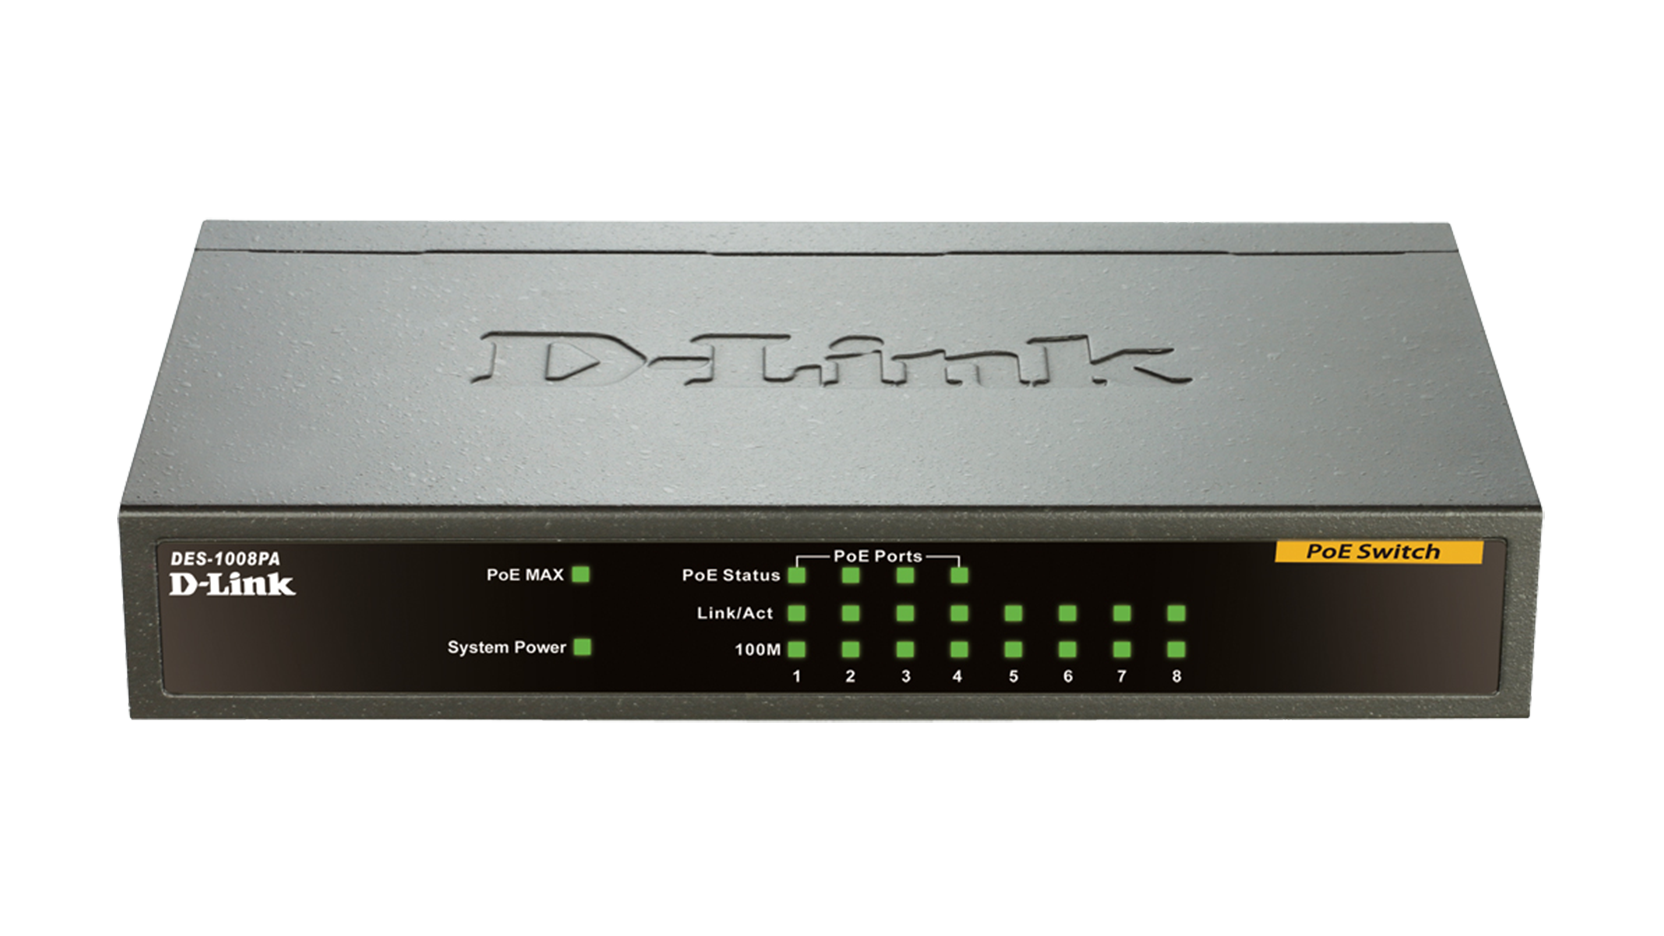 D-Link DES-1008PA 10/100 Unmanaged Desktop Switch